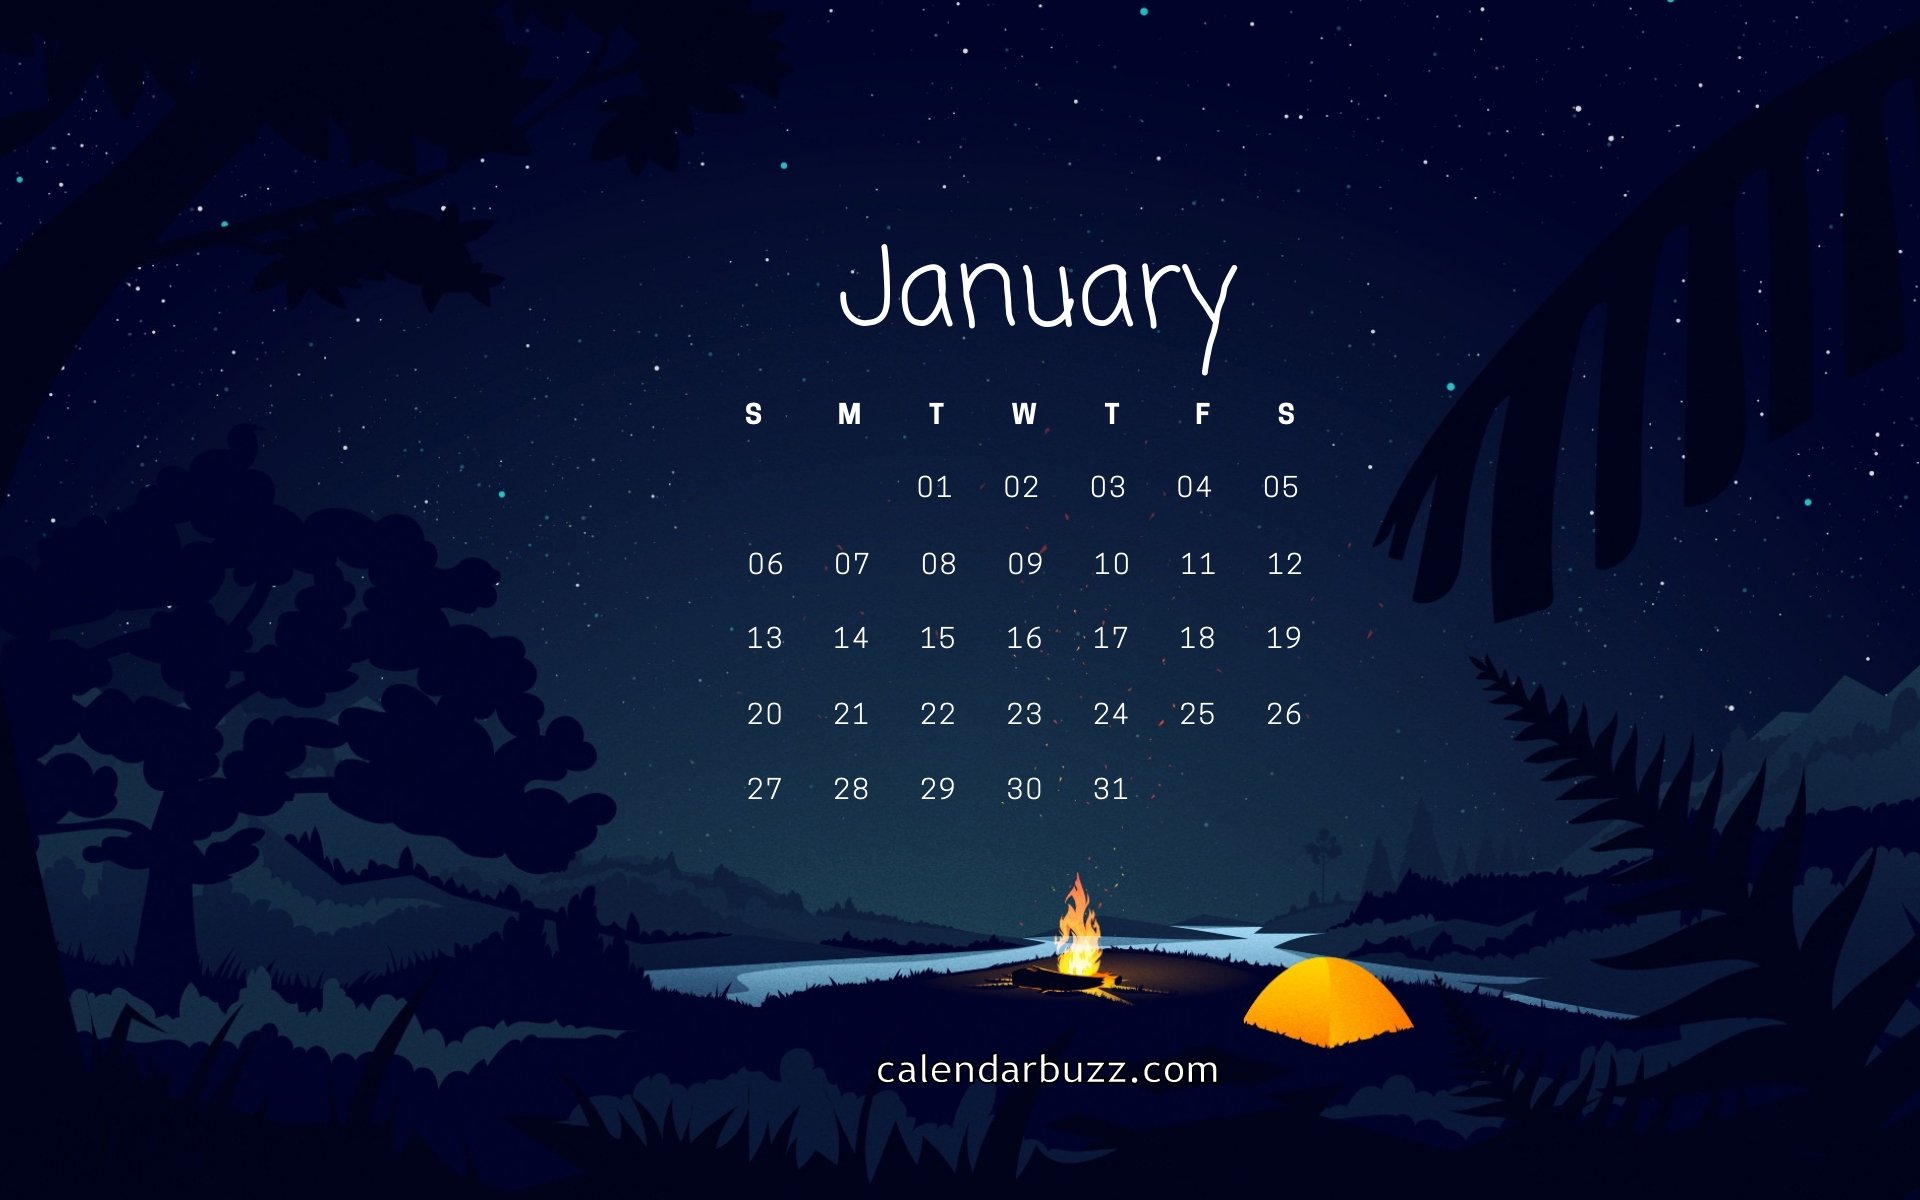 Free January 2019 Calendar Wallpapers Download CalendarBuzz